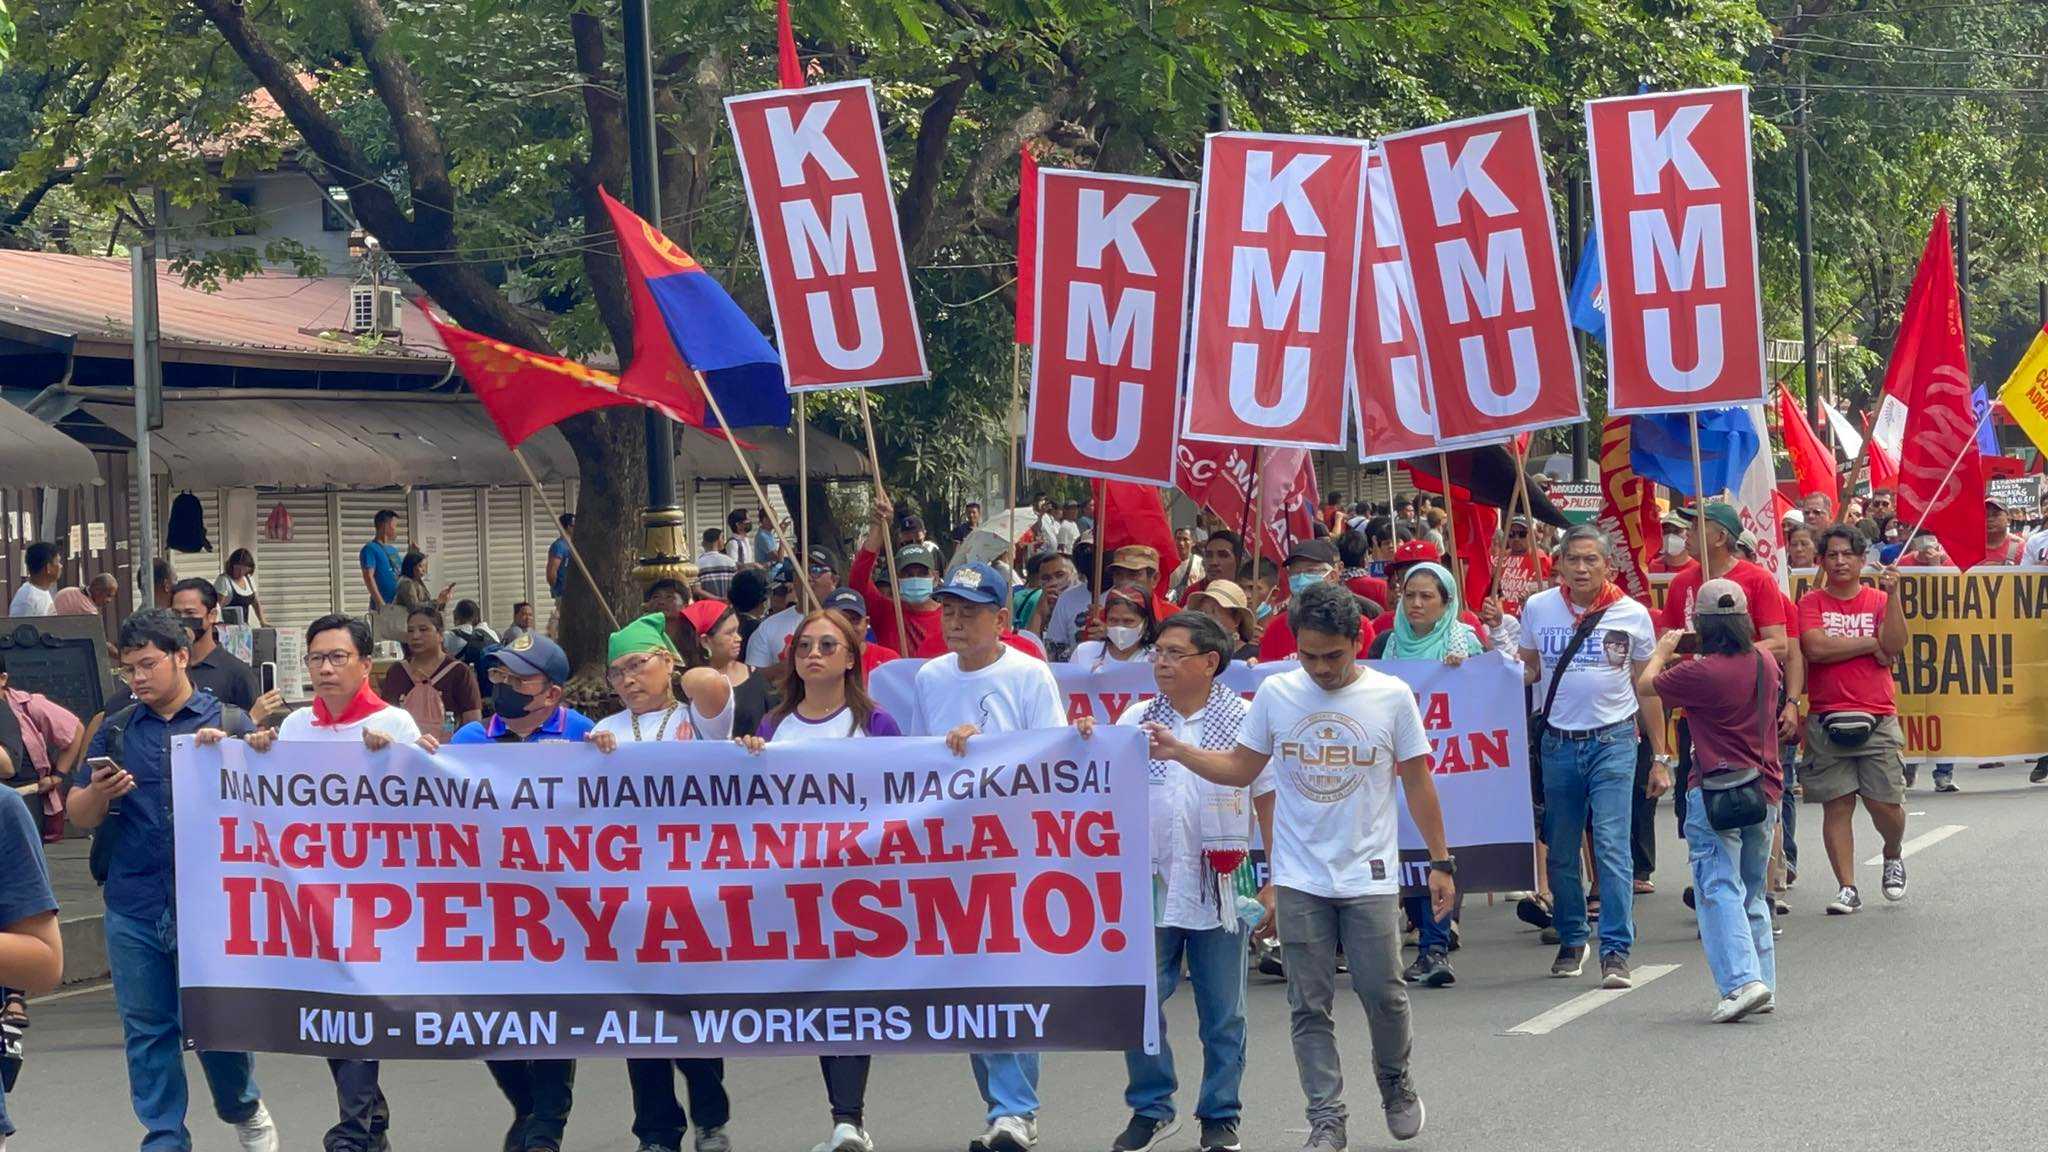 Progressive groups stage protest on Andres Bonifacio's 160th birth anniversary